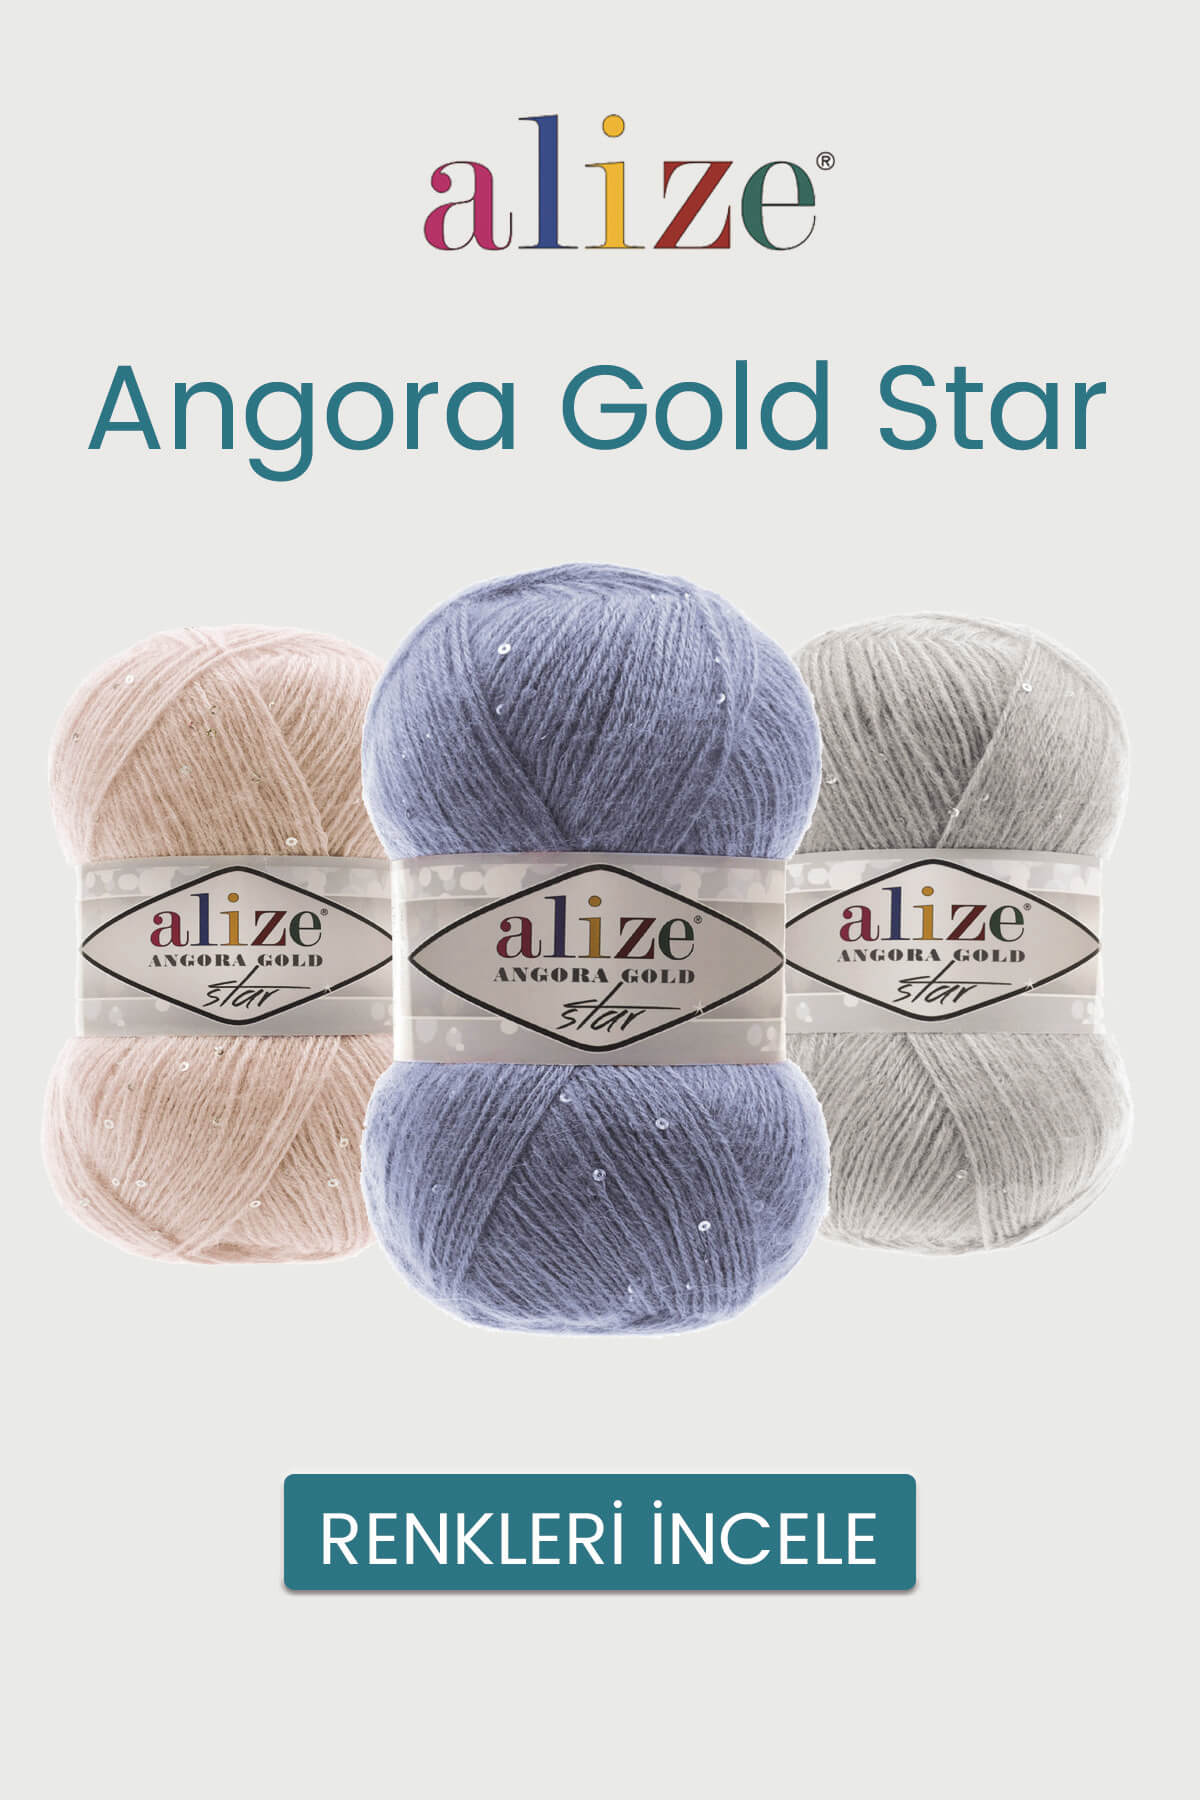 alize-angora-gold-star-tekstilland